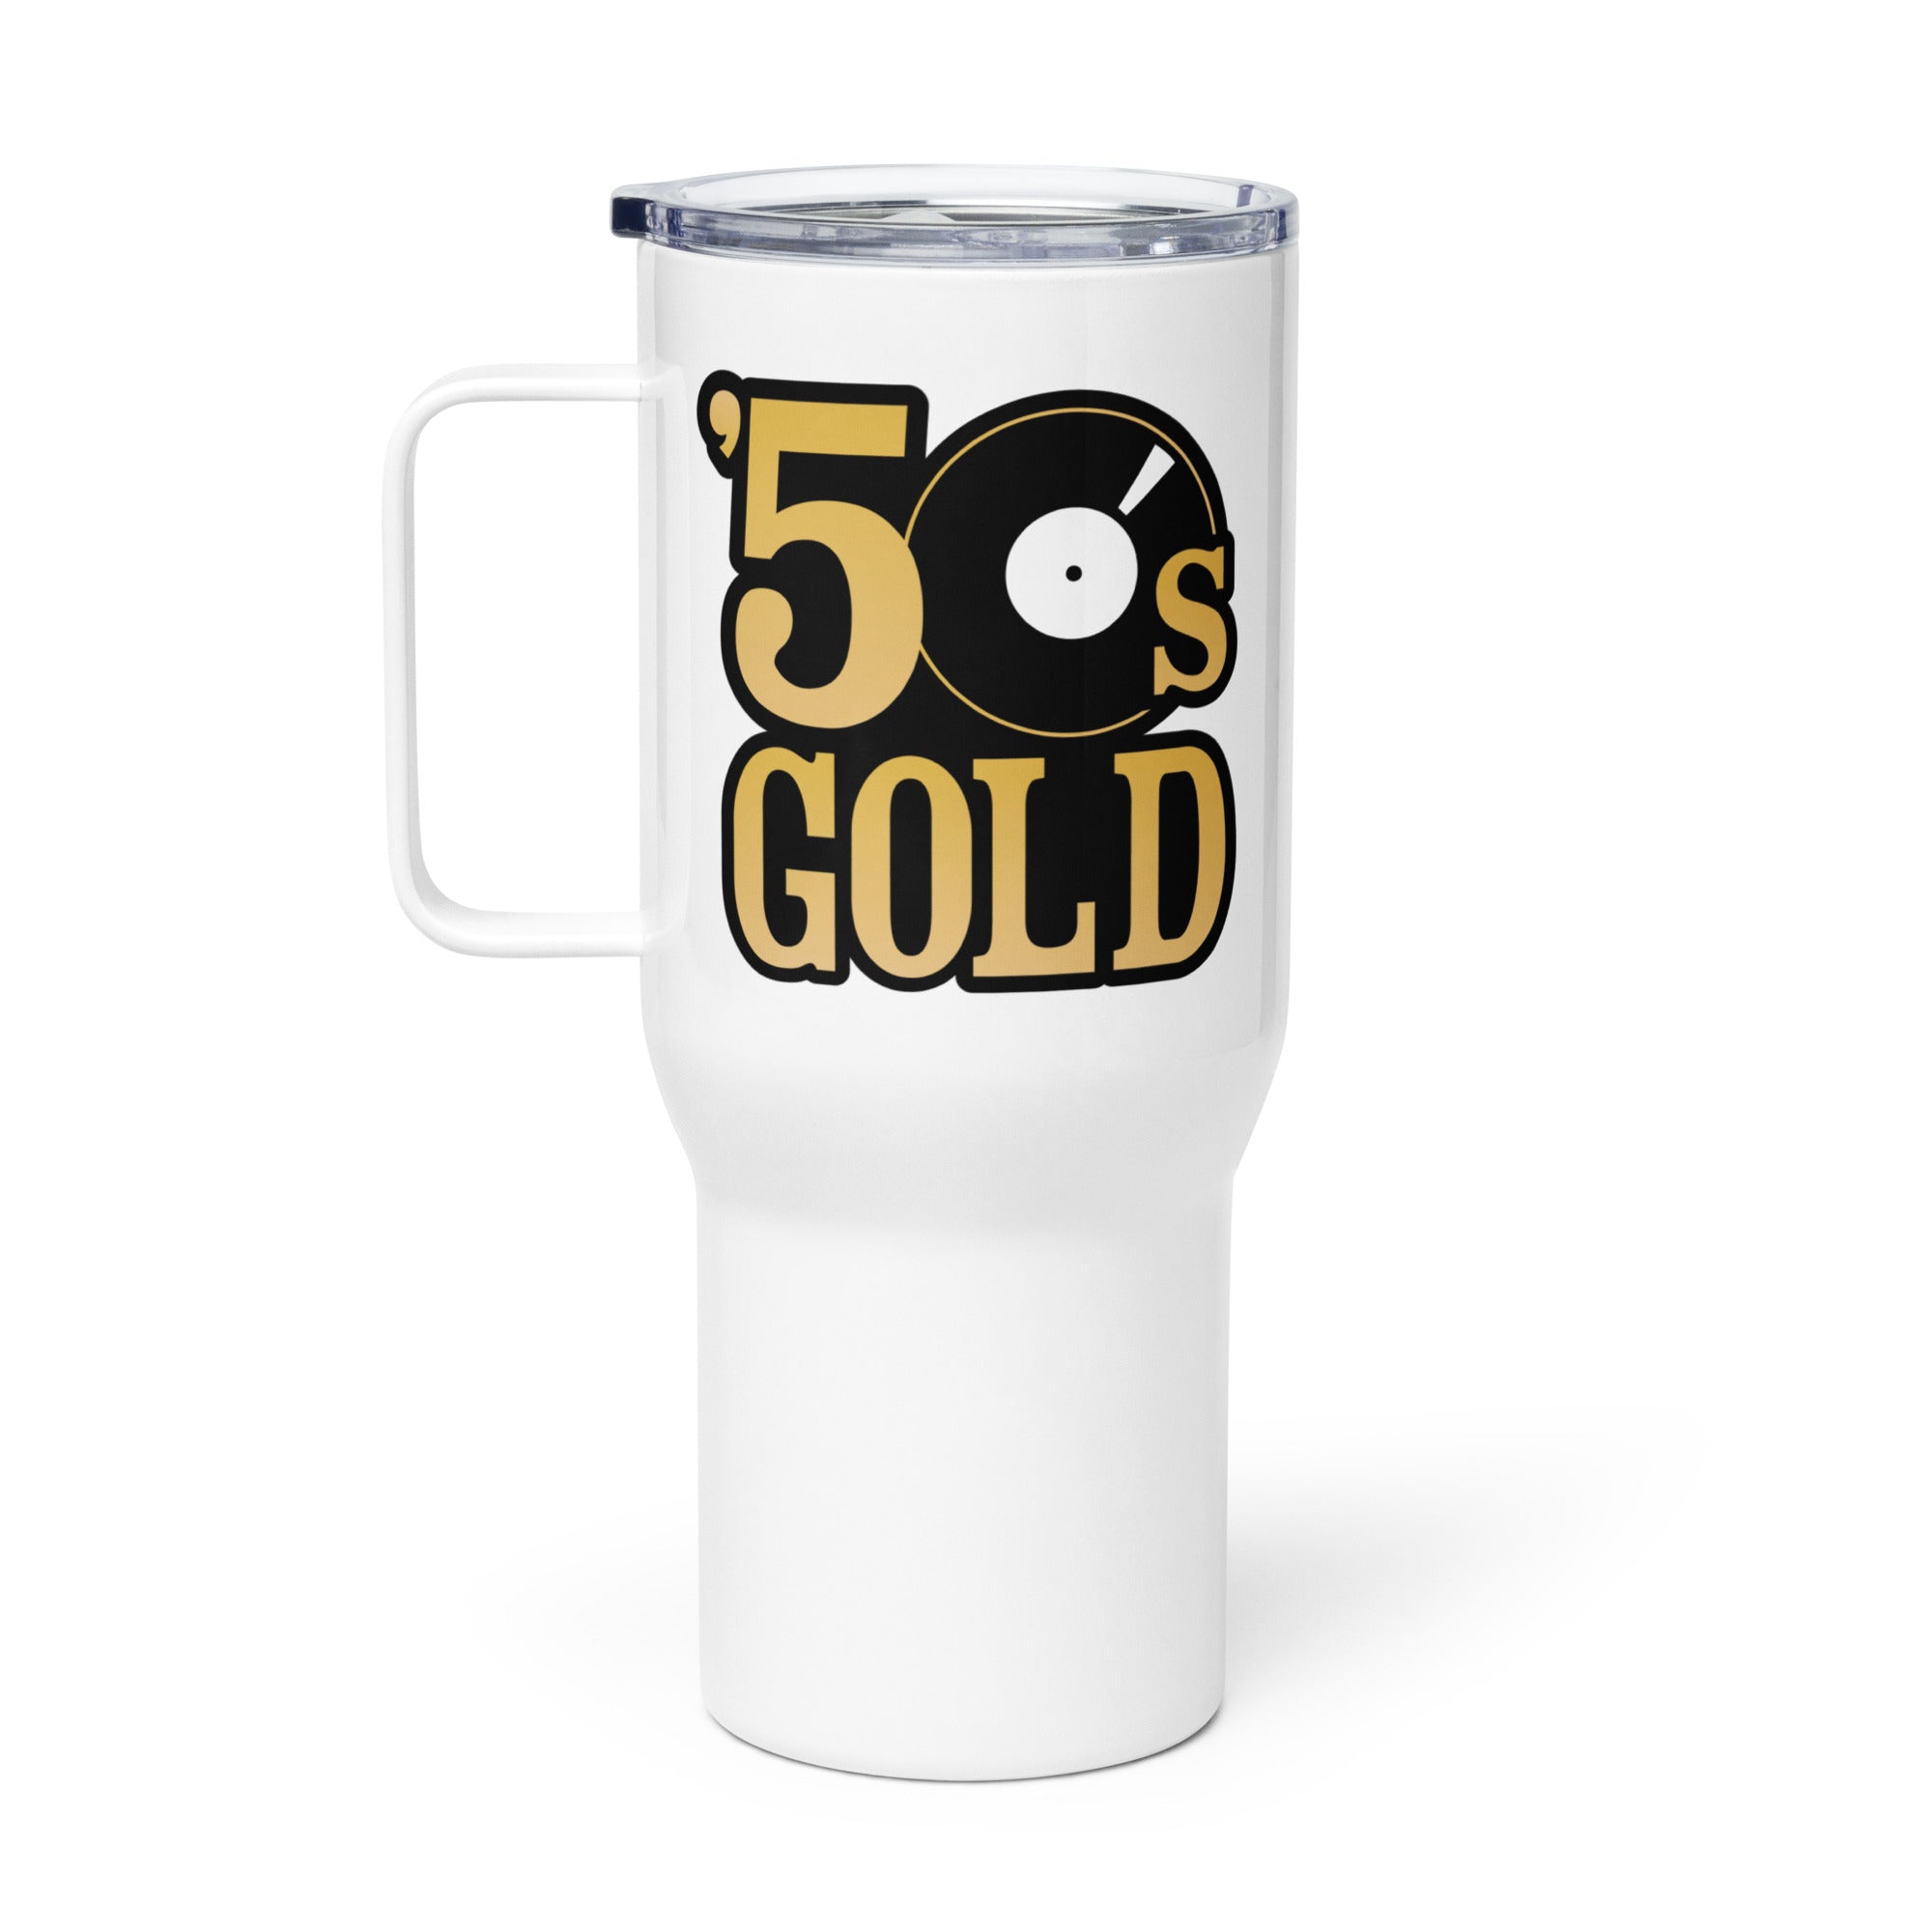 50s Gold: Travel Mug